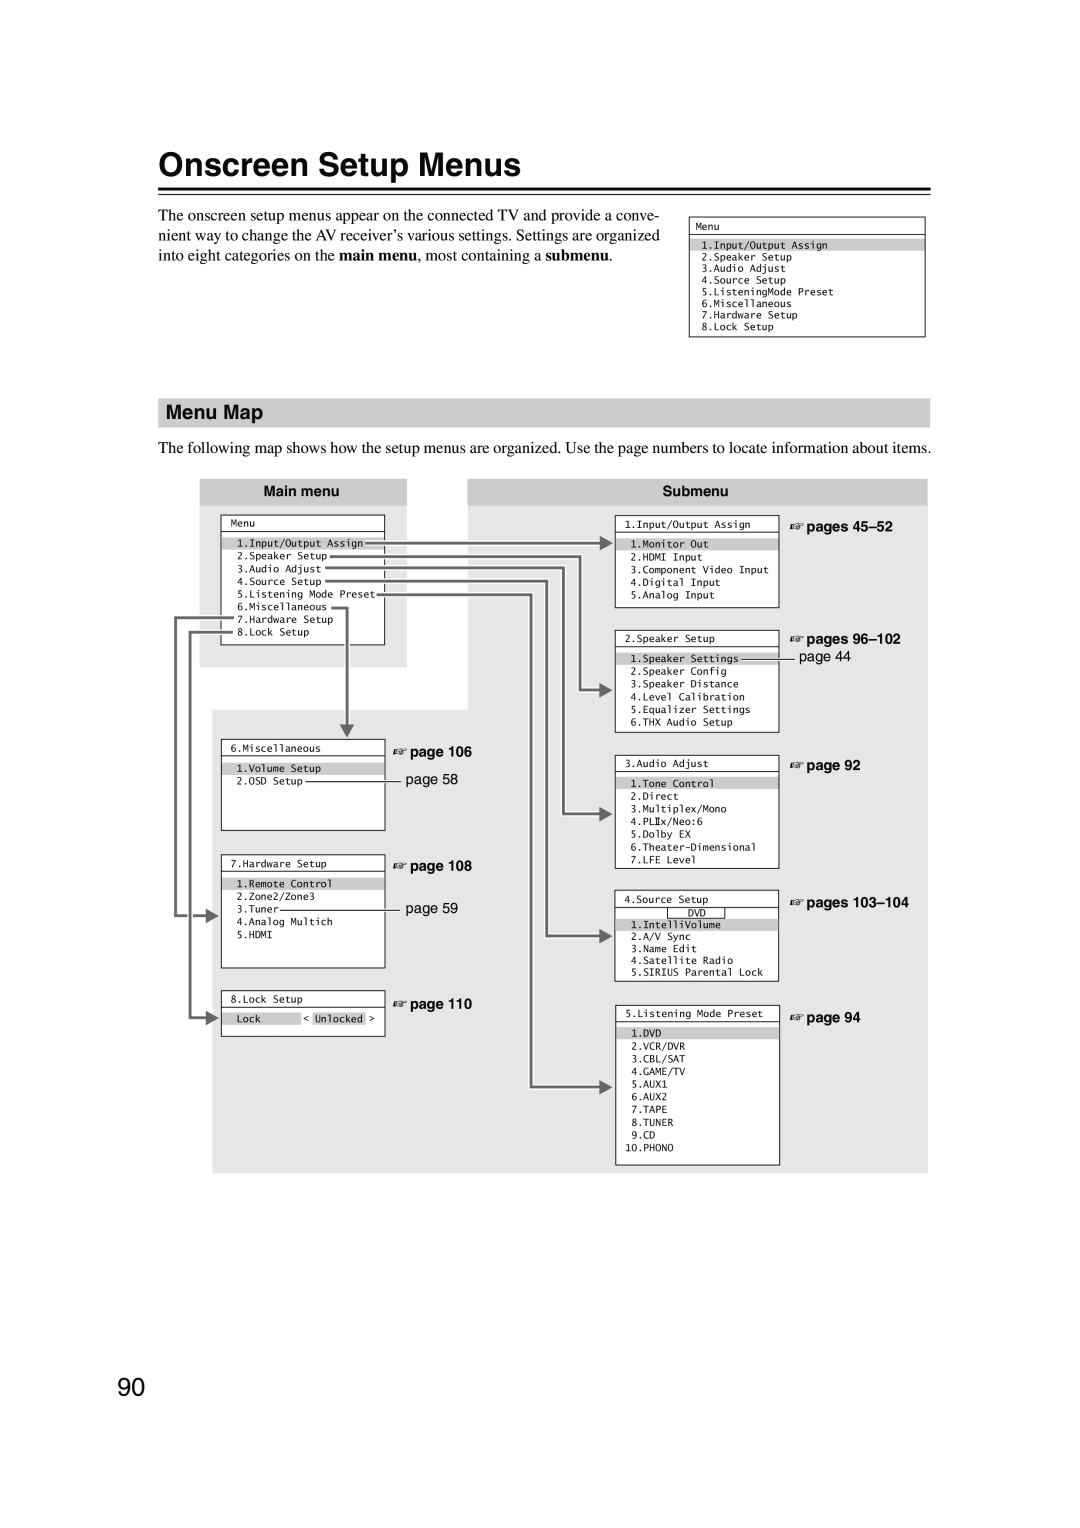 Integra DTR-7.8 instruction manual Onscreen Setup Menus, Menu Map 